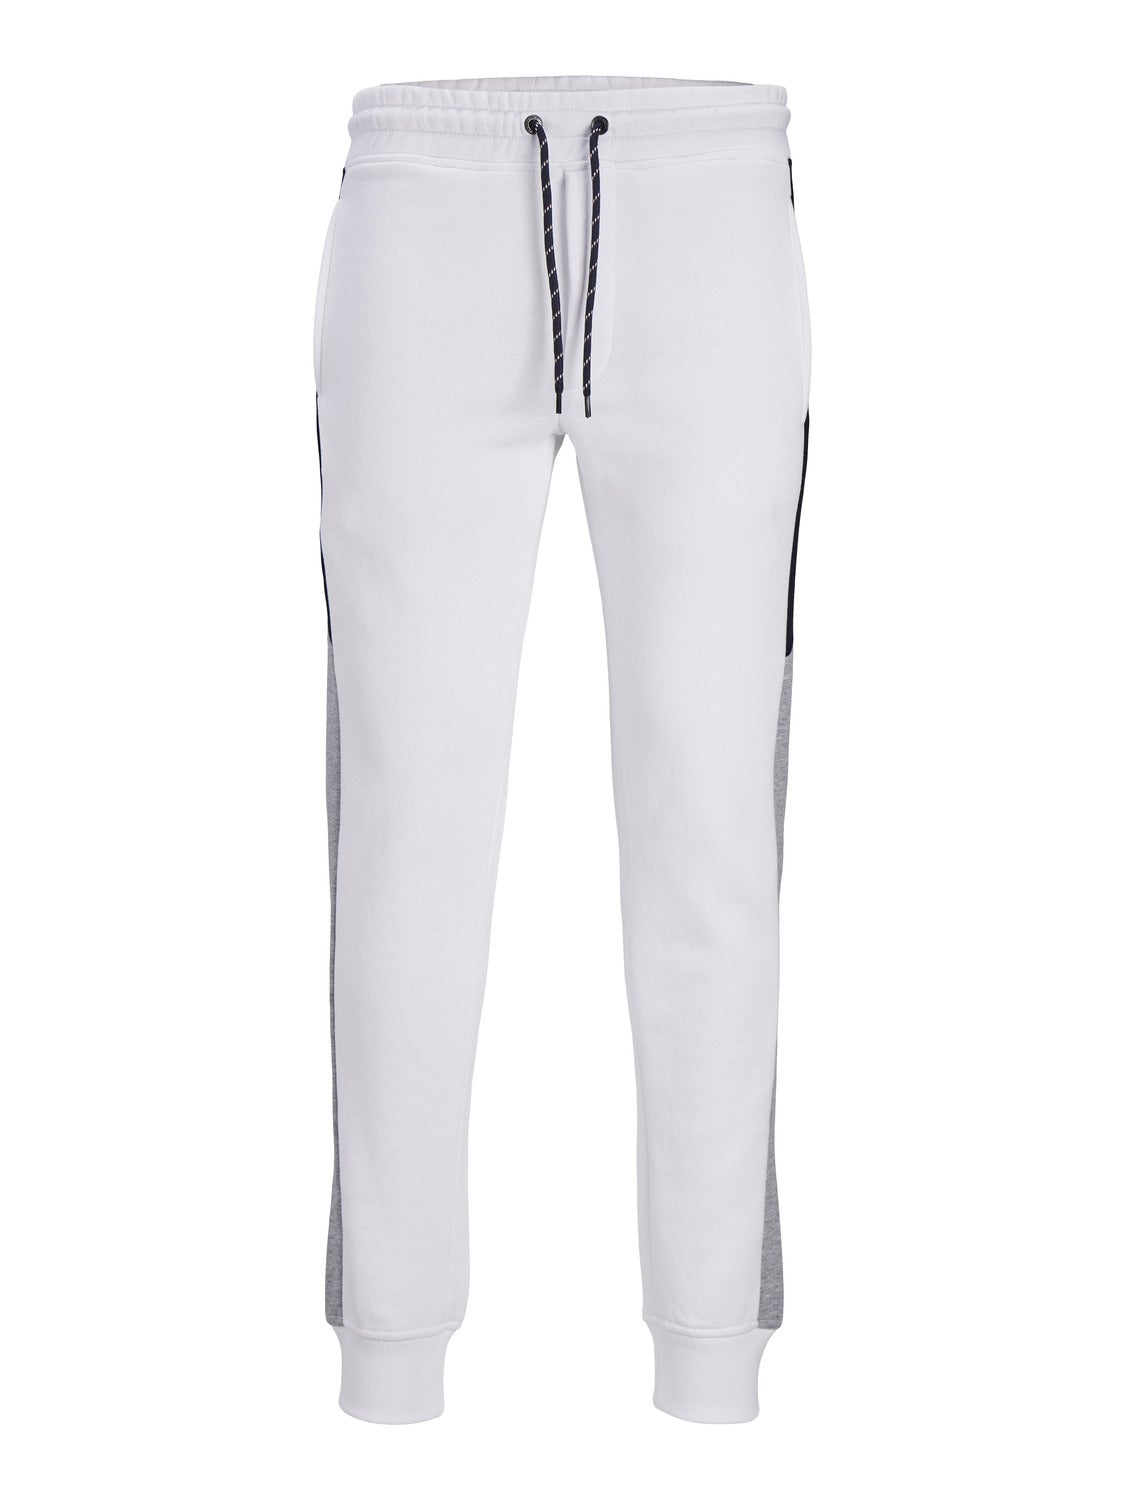 Buy Men White Stripe Casual Track Pants Online - 416164 | Peter England